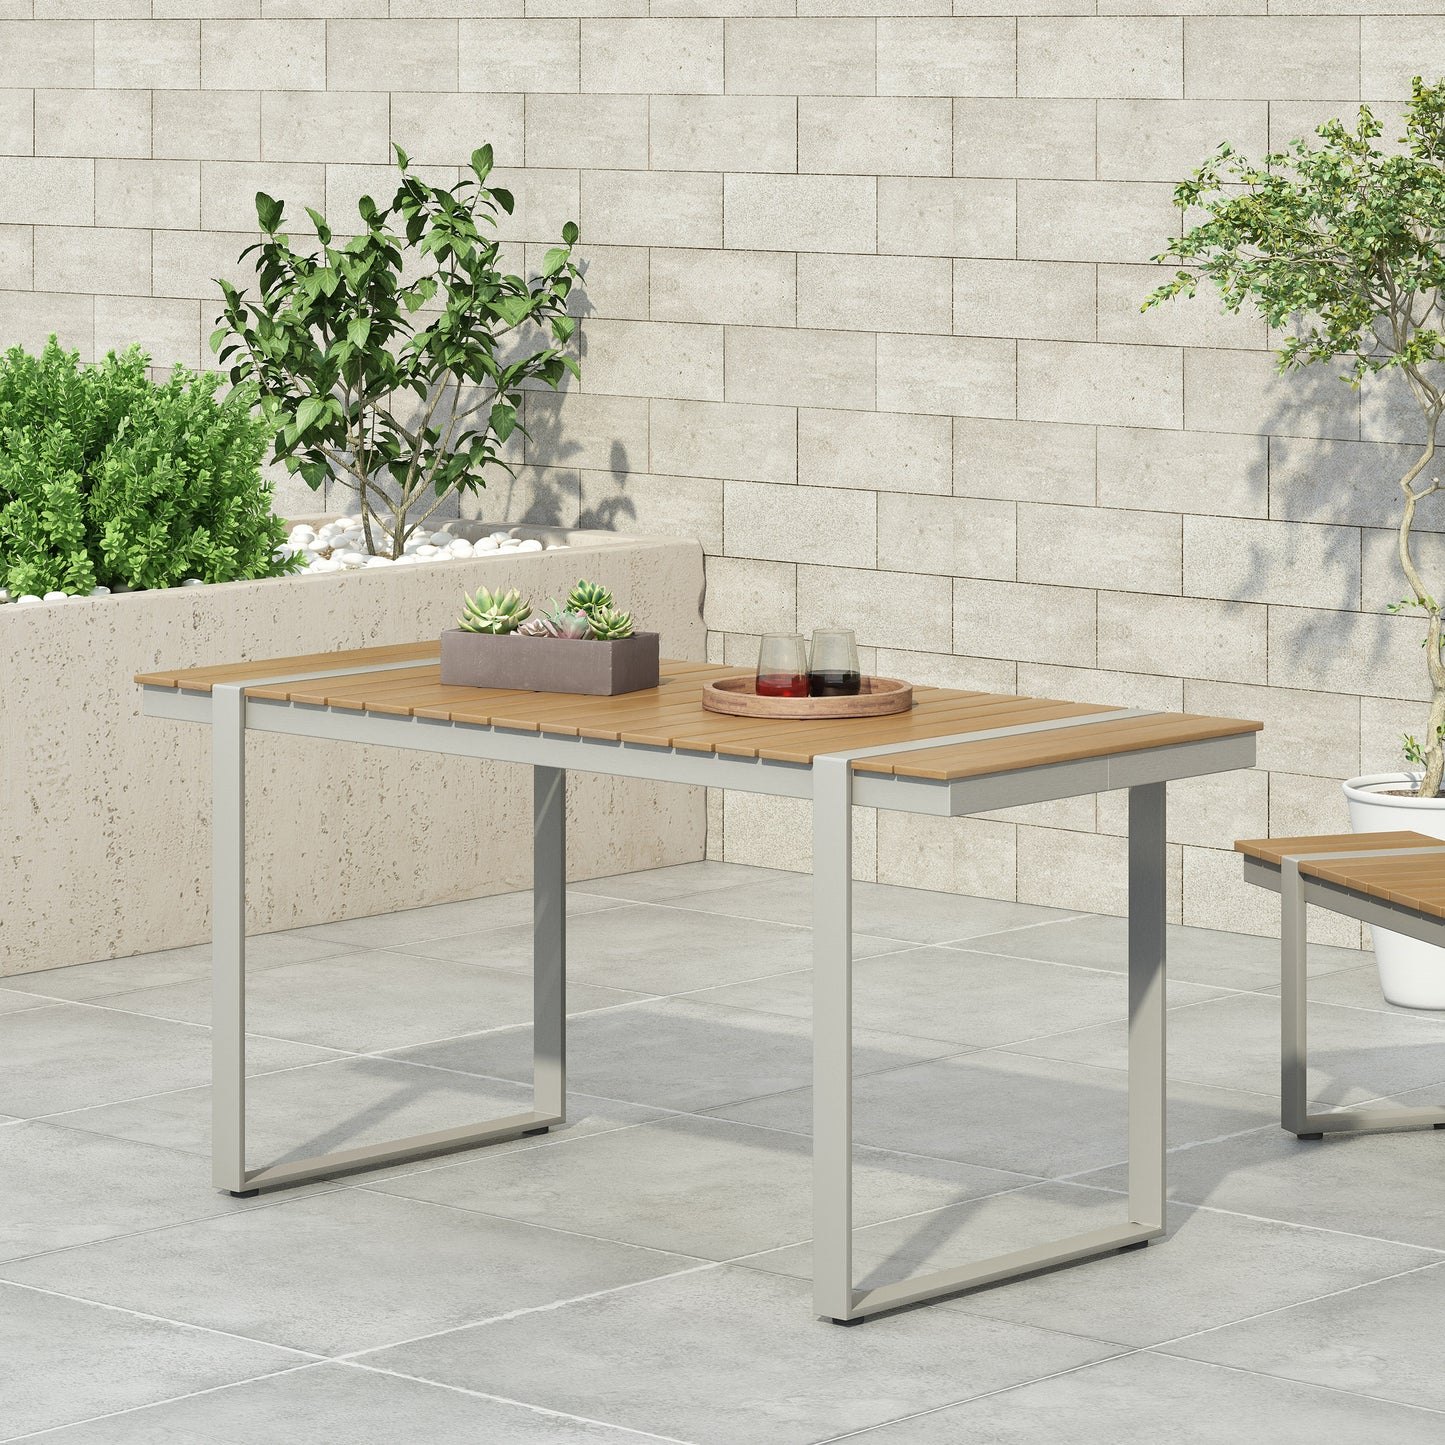 Mora Outdoor Aluminum Dining Table